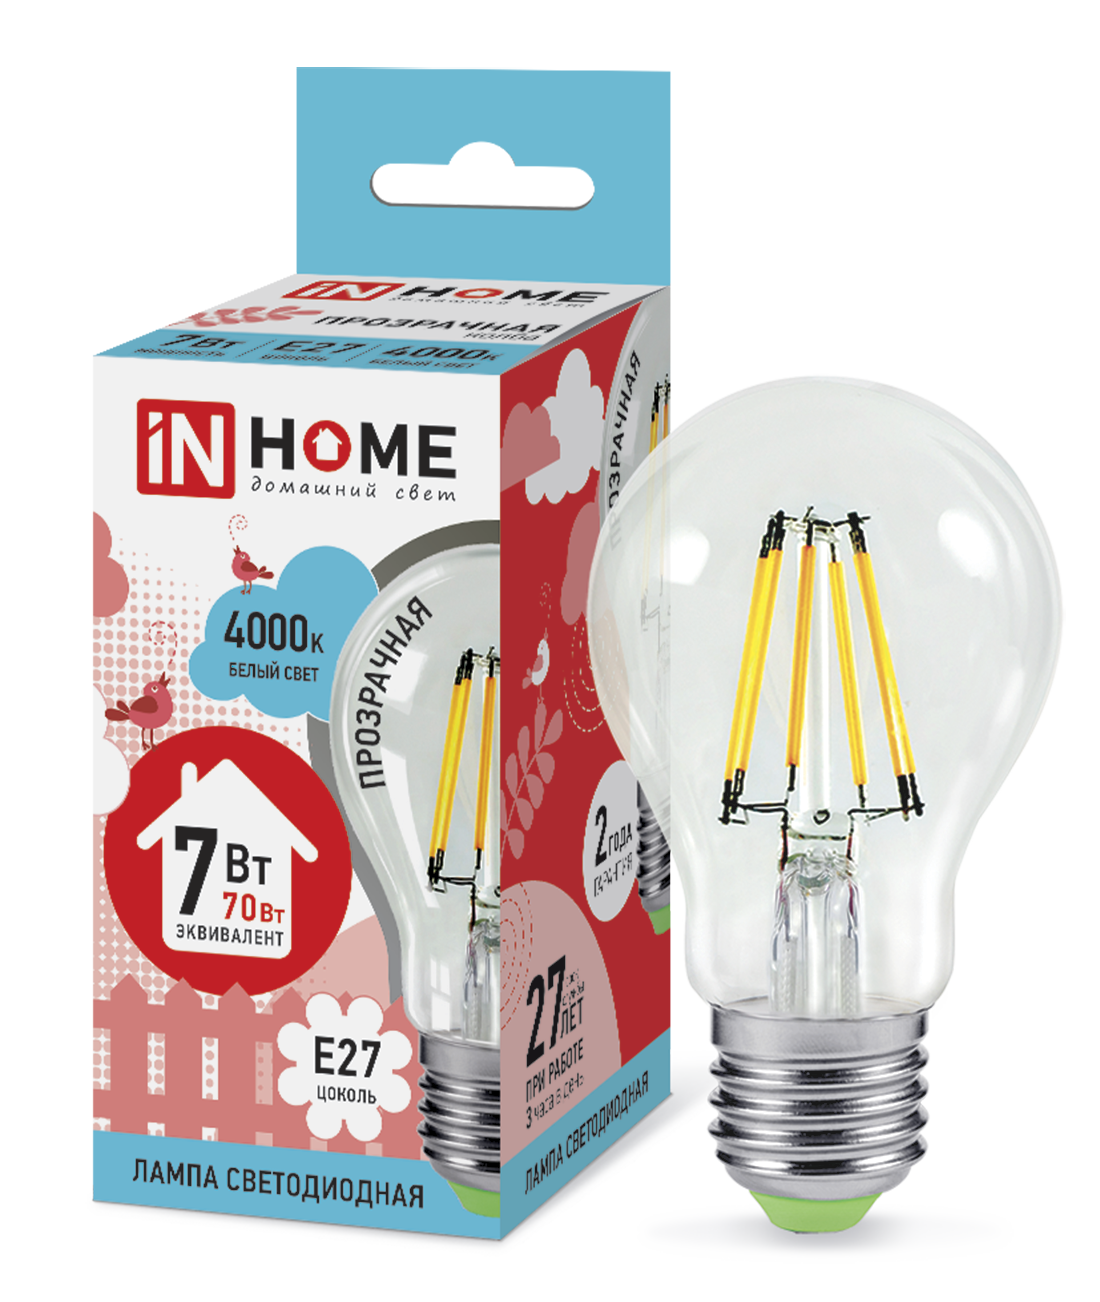 Купить лампа светодиодная led-a60-deco 7вт 230в е27 4000к 630лм прозрачная in home, 100% качество, в наличии на L-ed.ru